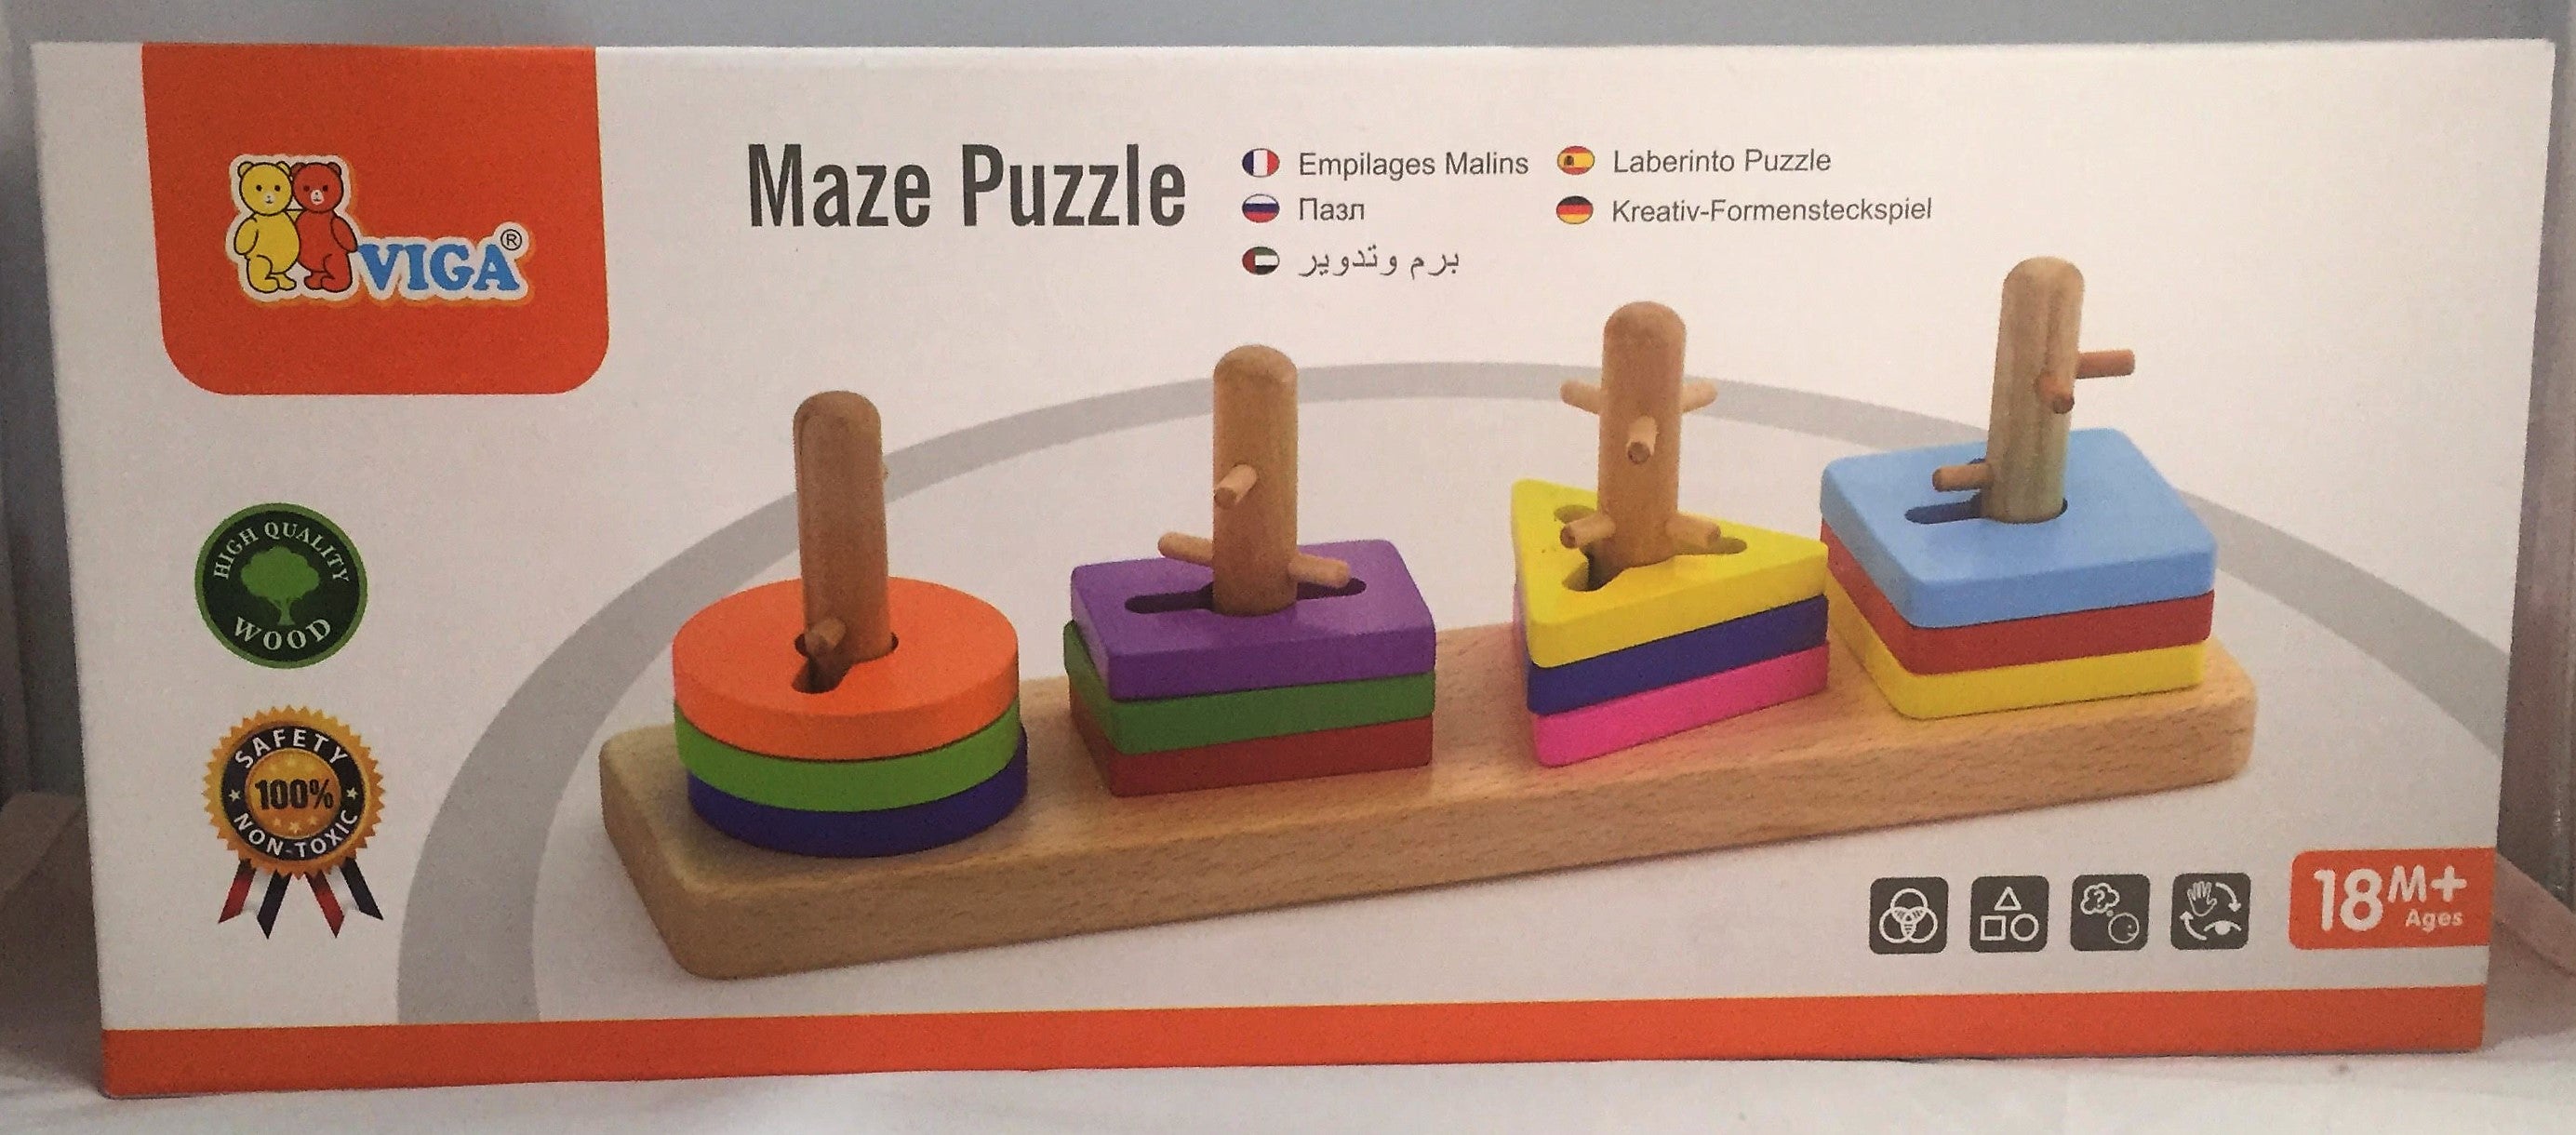 SALE - Viga Toys Maze Puzzle Image